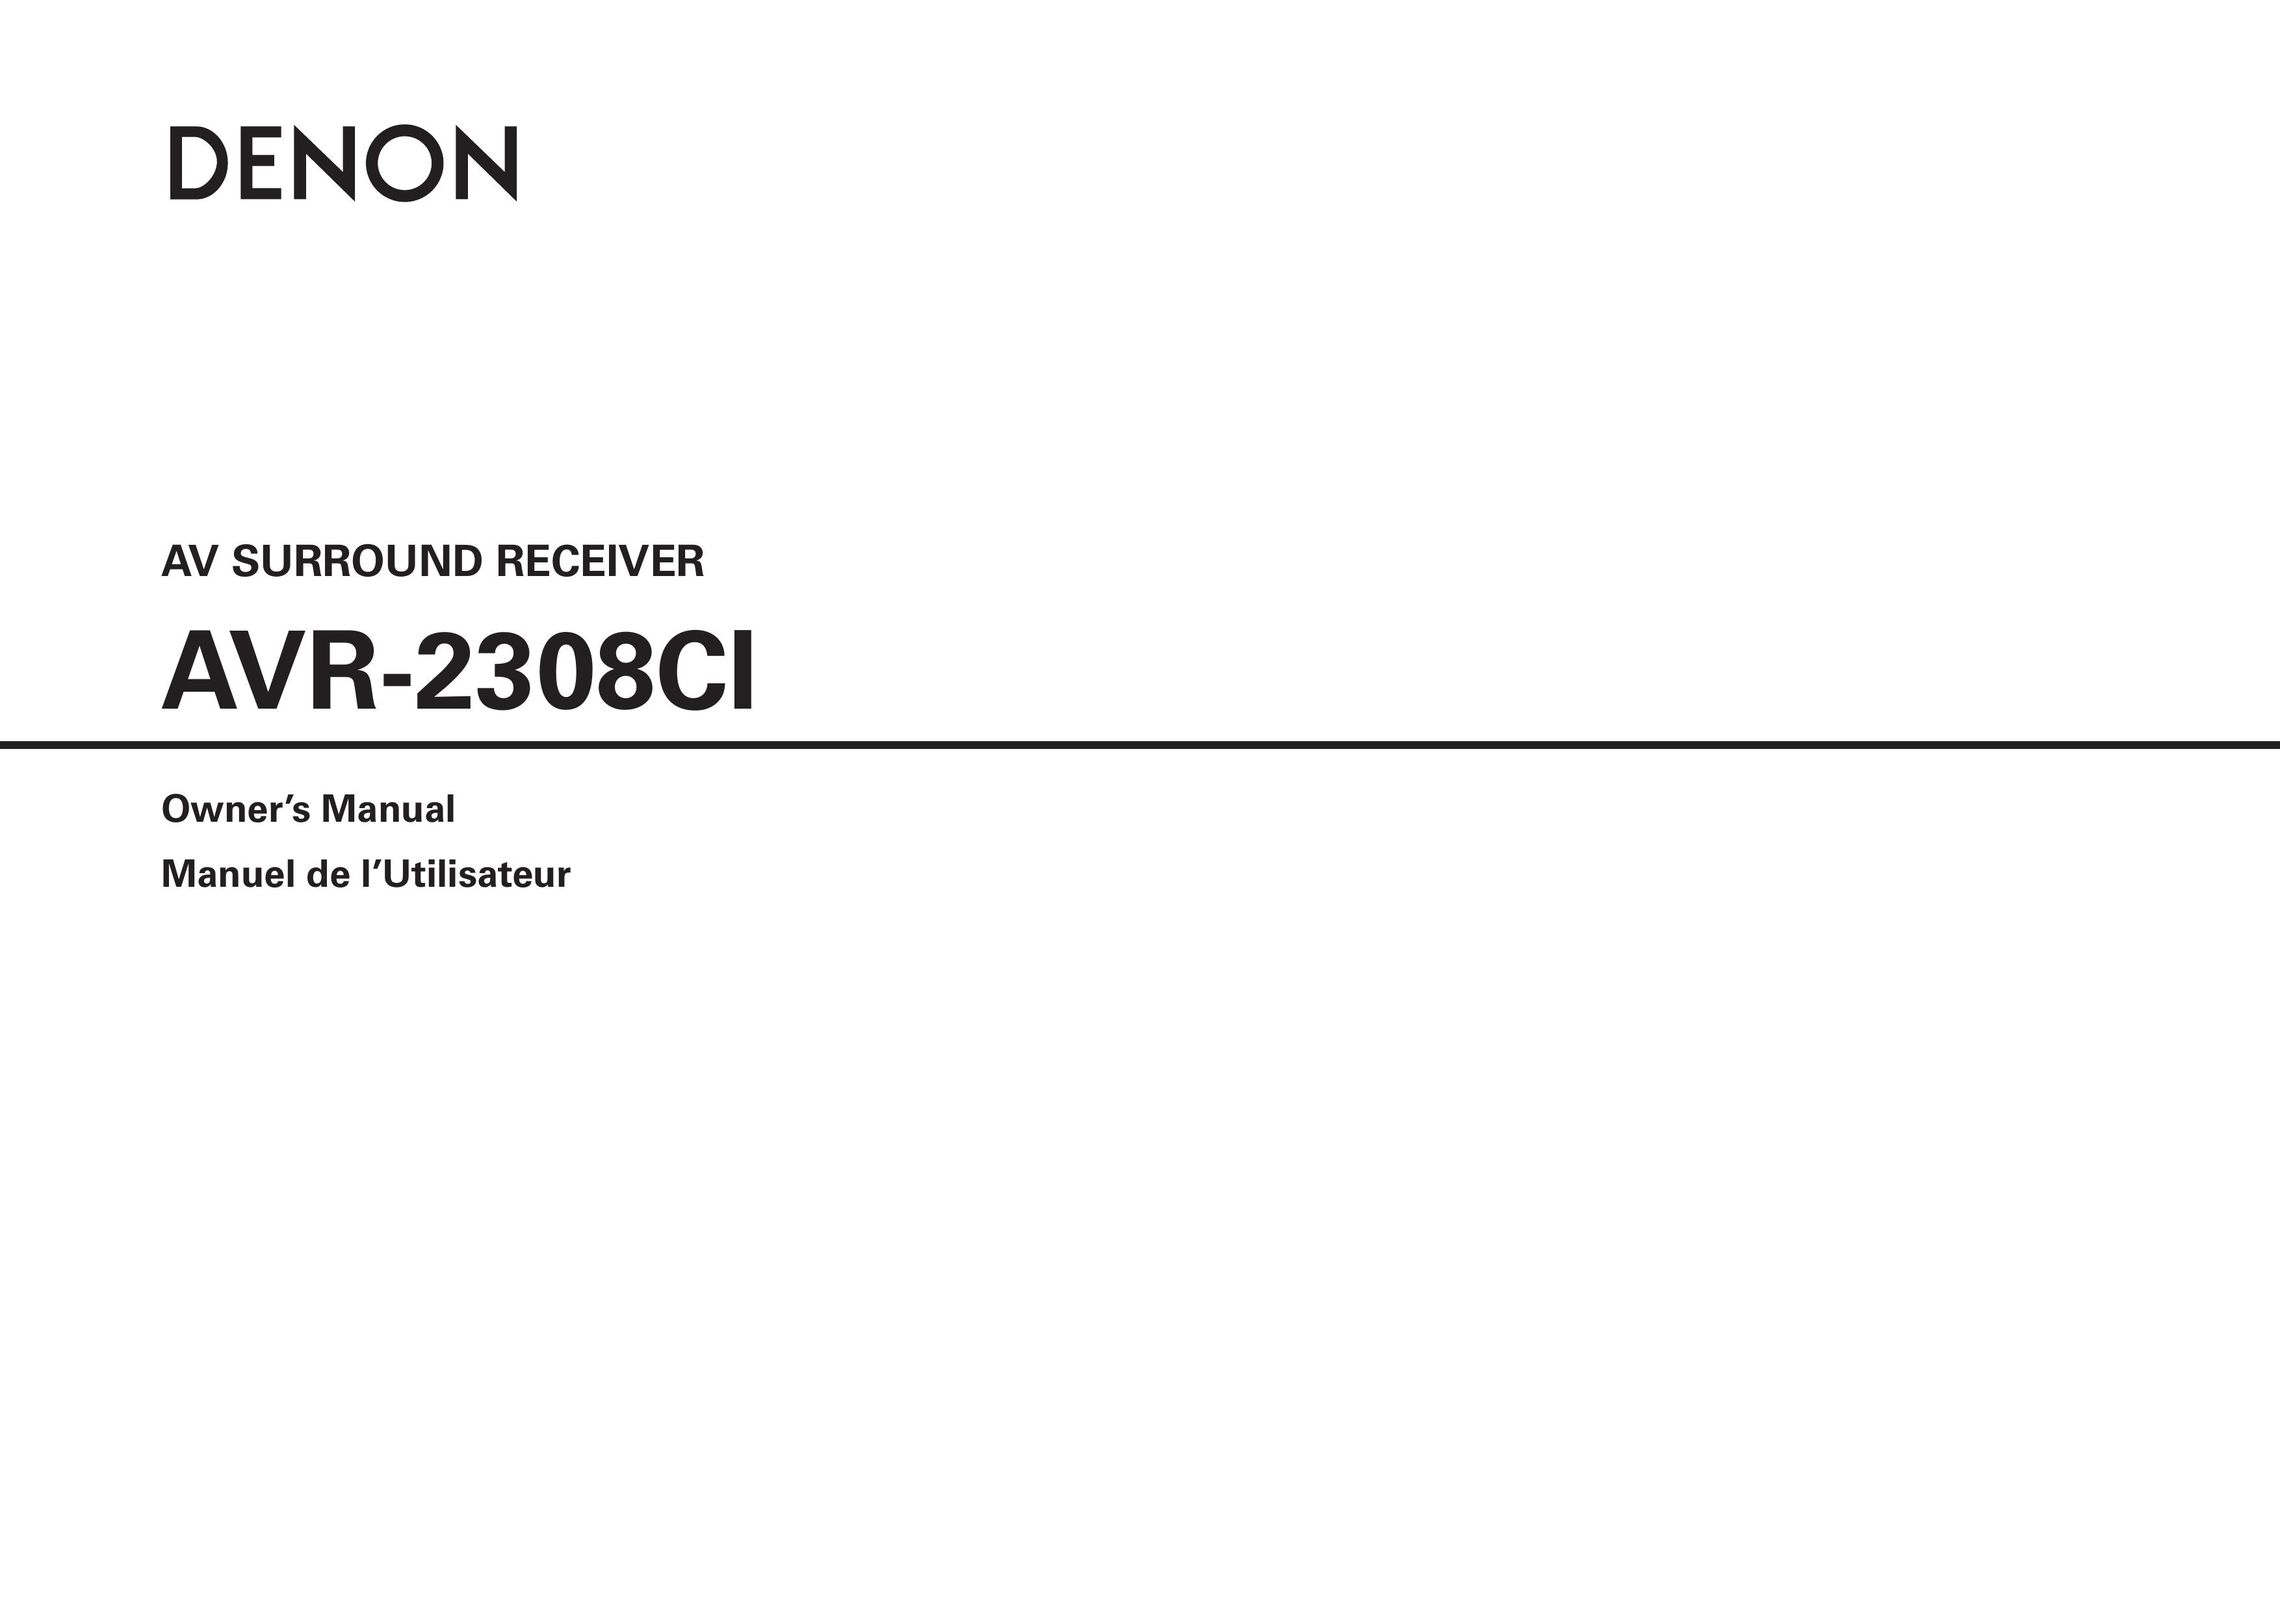 Denon AVR-2308CI Stereo Receiver User Manual